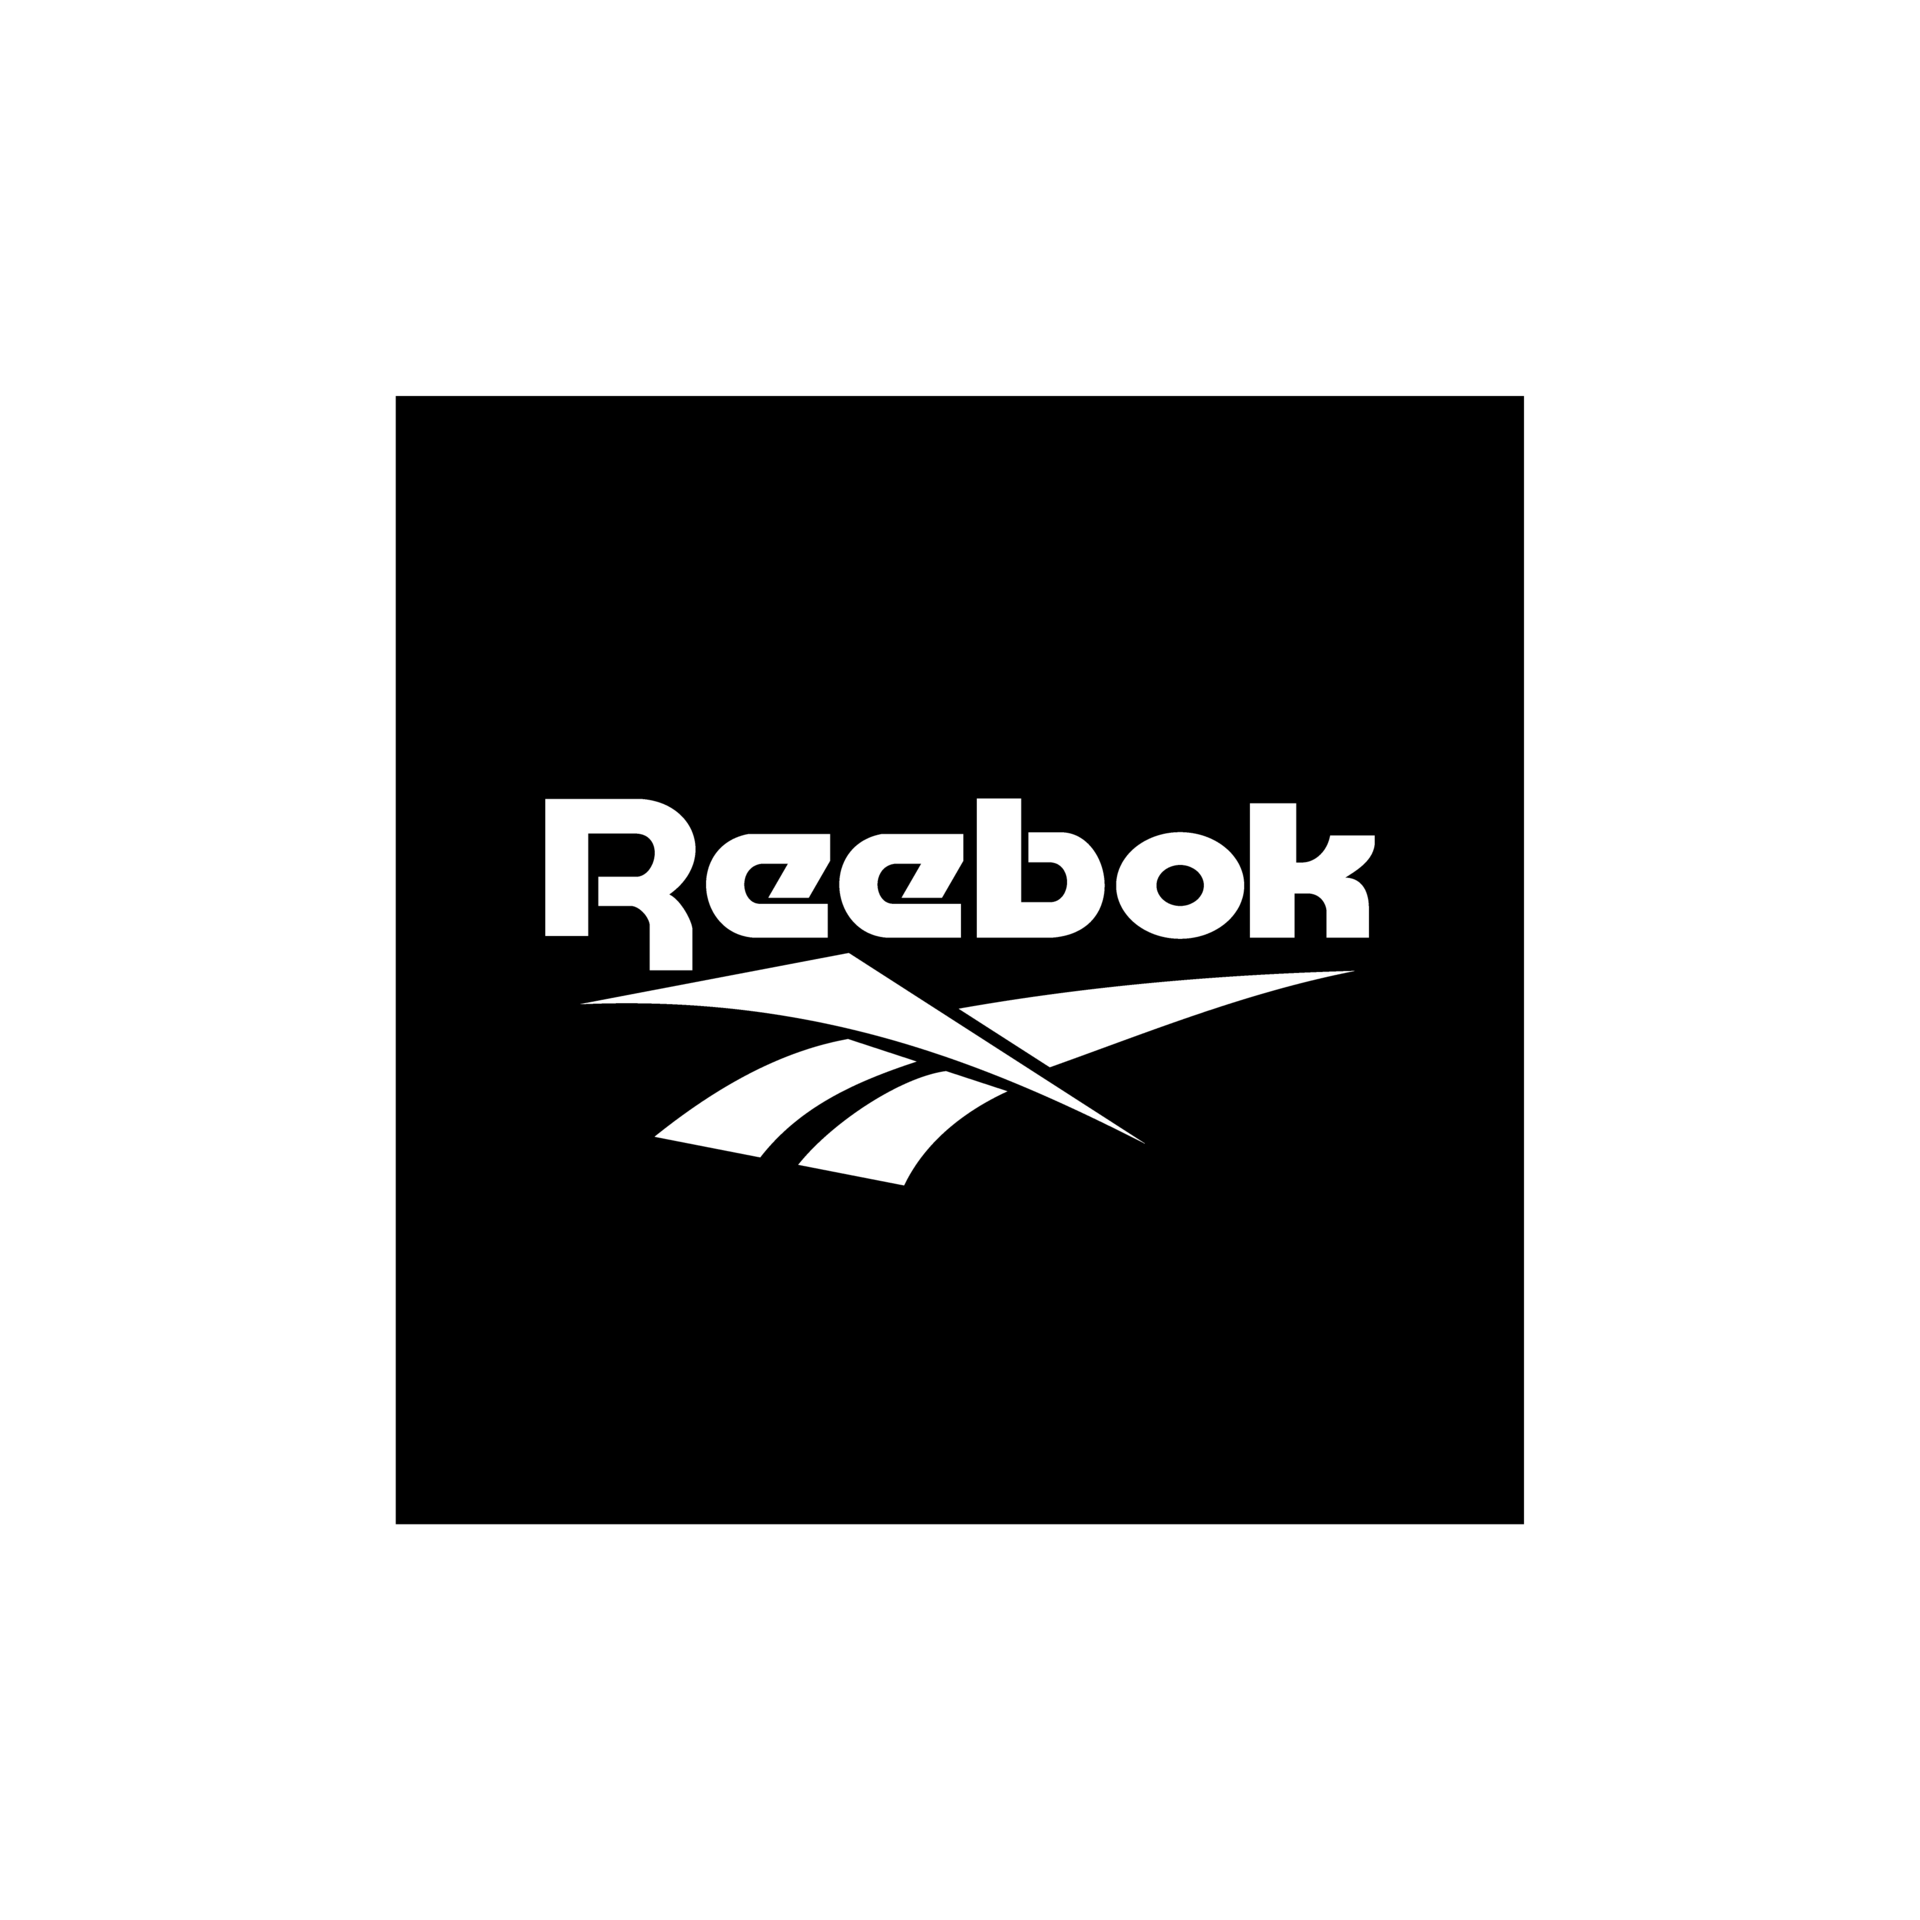 Reebok logo black and white PNG 24554961 PNG